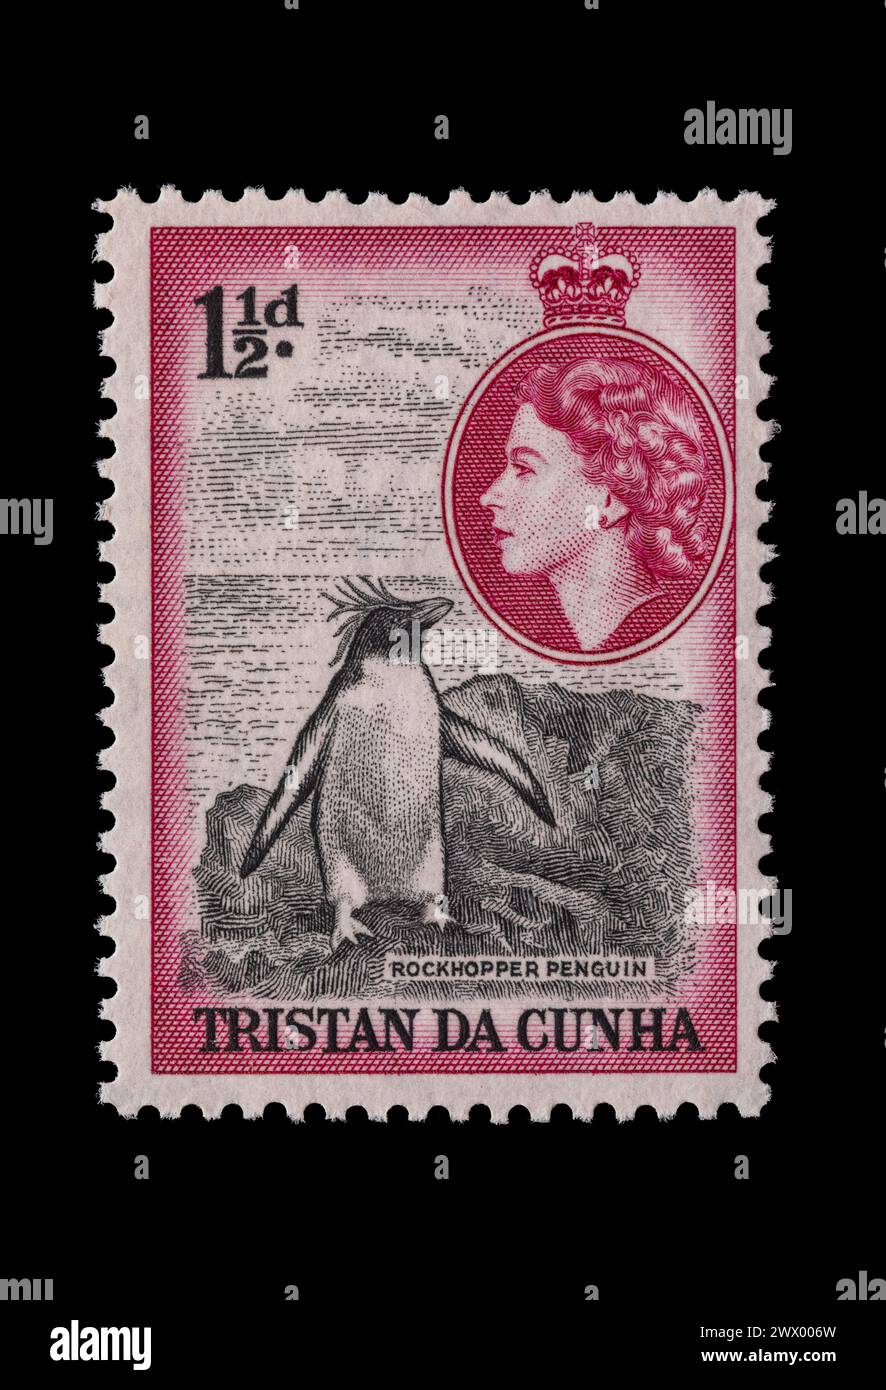 Vintage postage stamp from Tristan da Cunha circa 1956. Queen Elizabeth II. Artwork showing a rockhopper penguin. Stock Photo